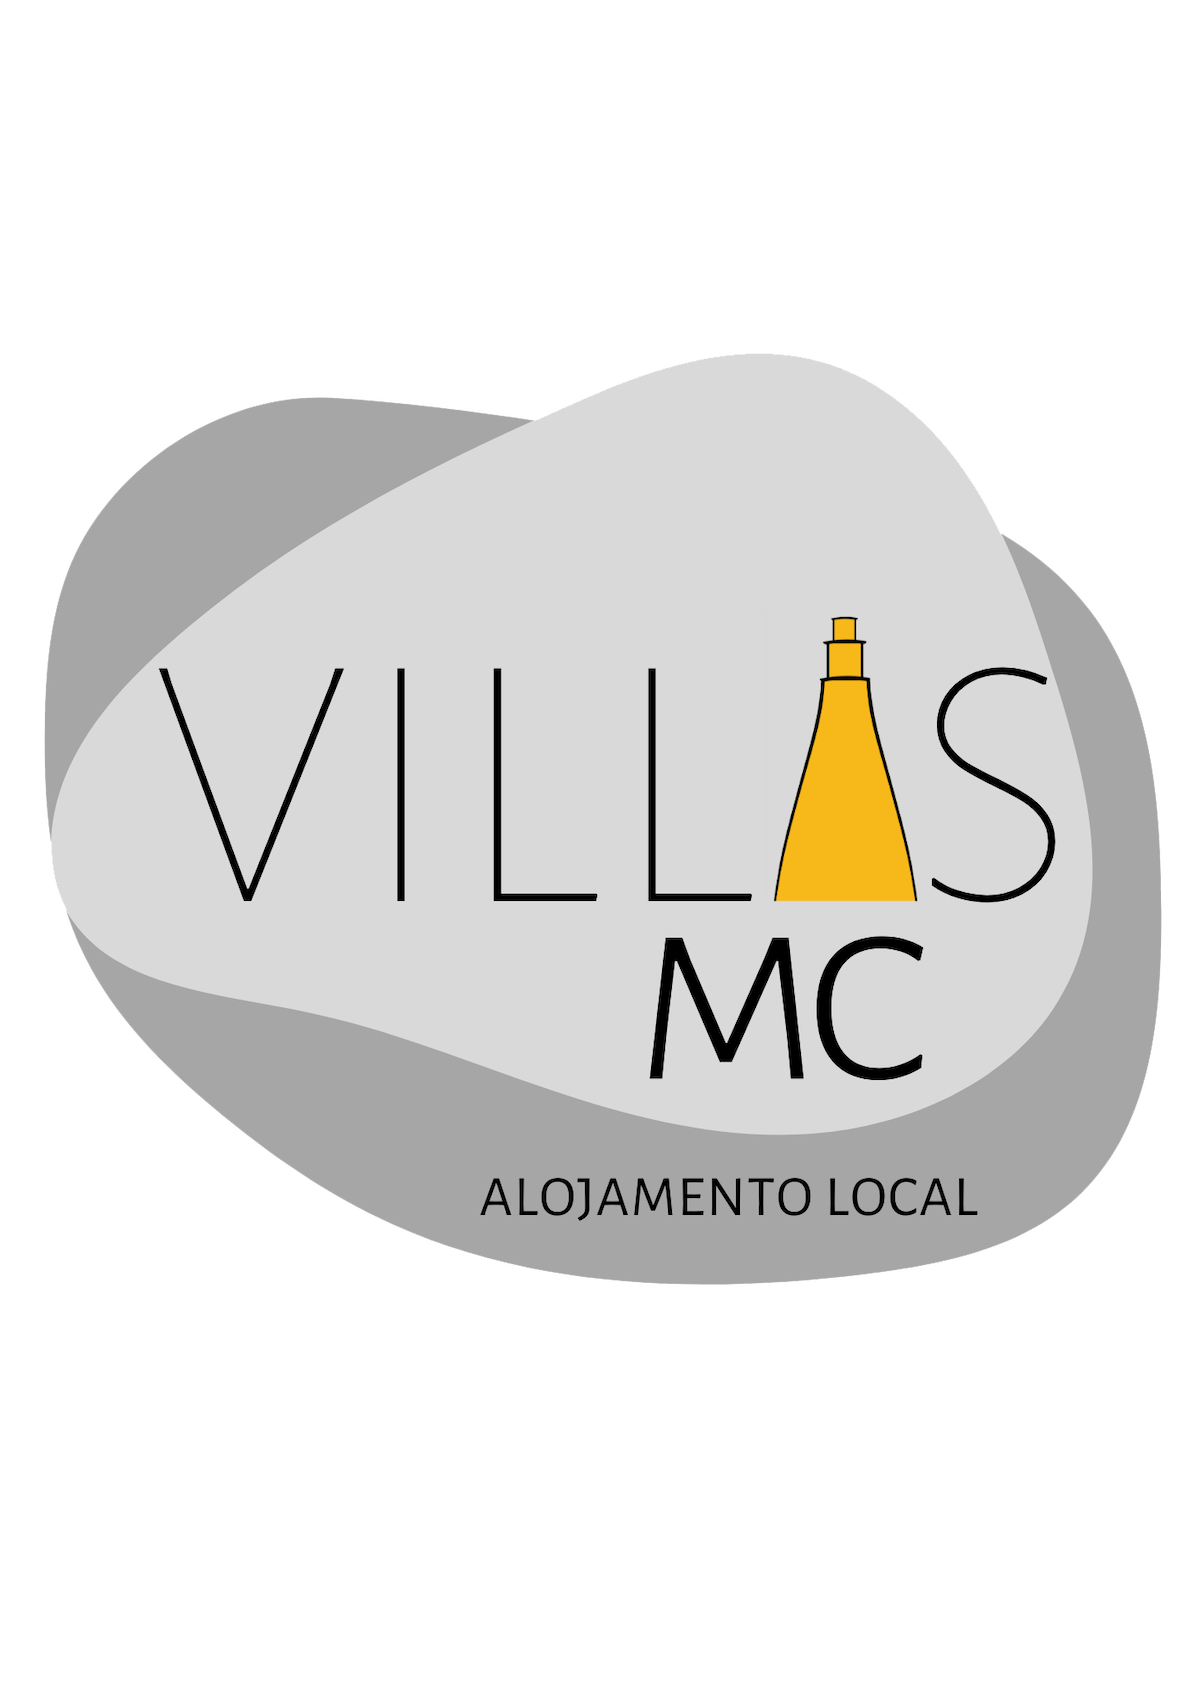 VillasMC - Alojamento local